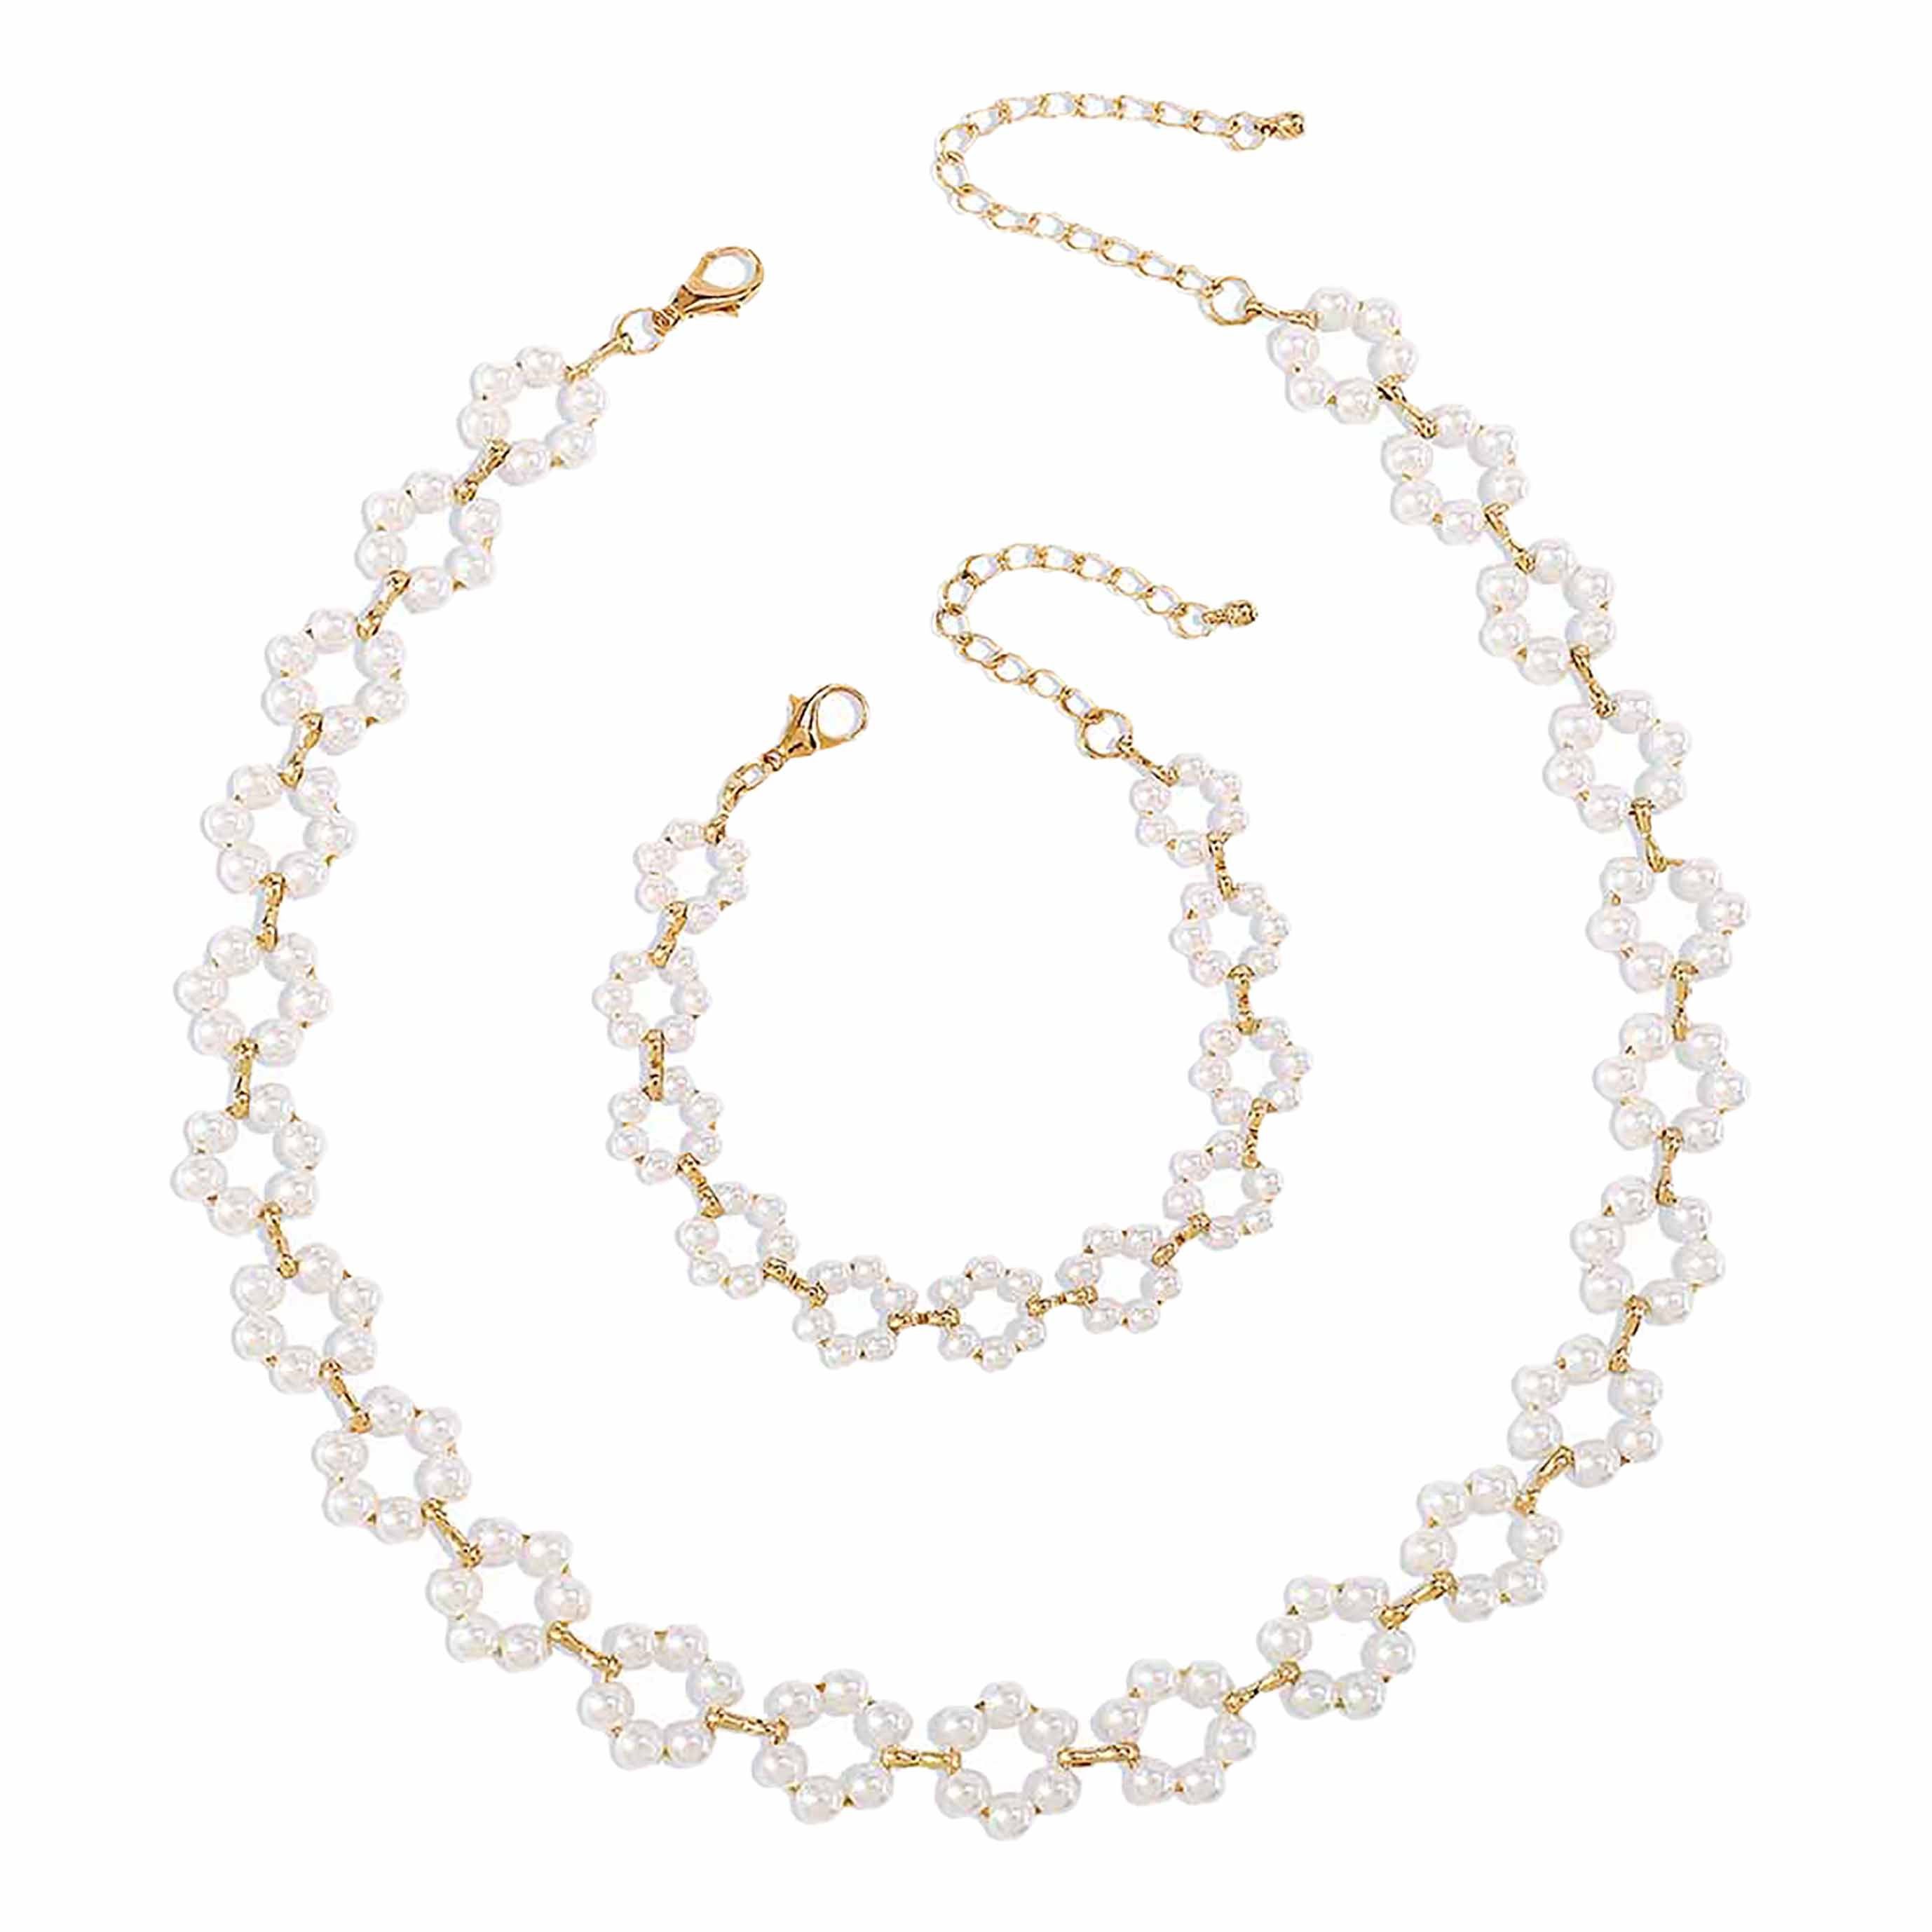 SRRINM Choker Kreative Perlenblumenkette Frauen für